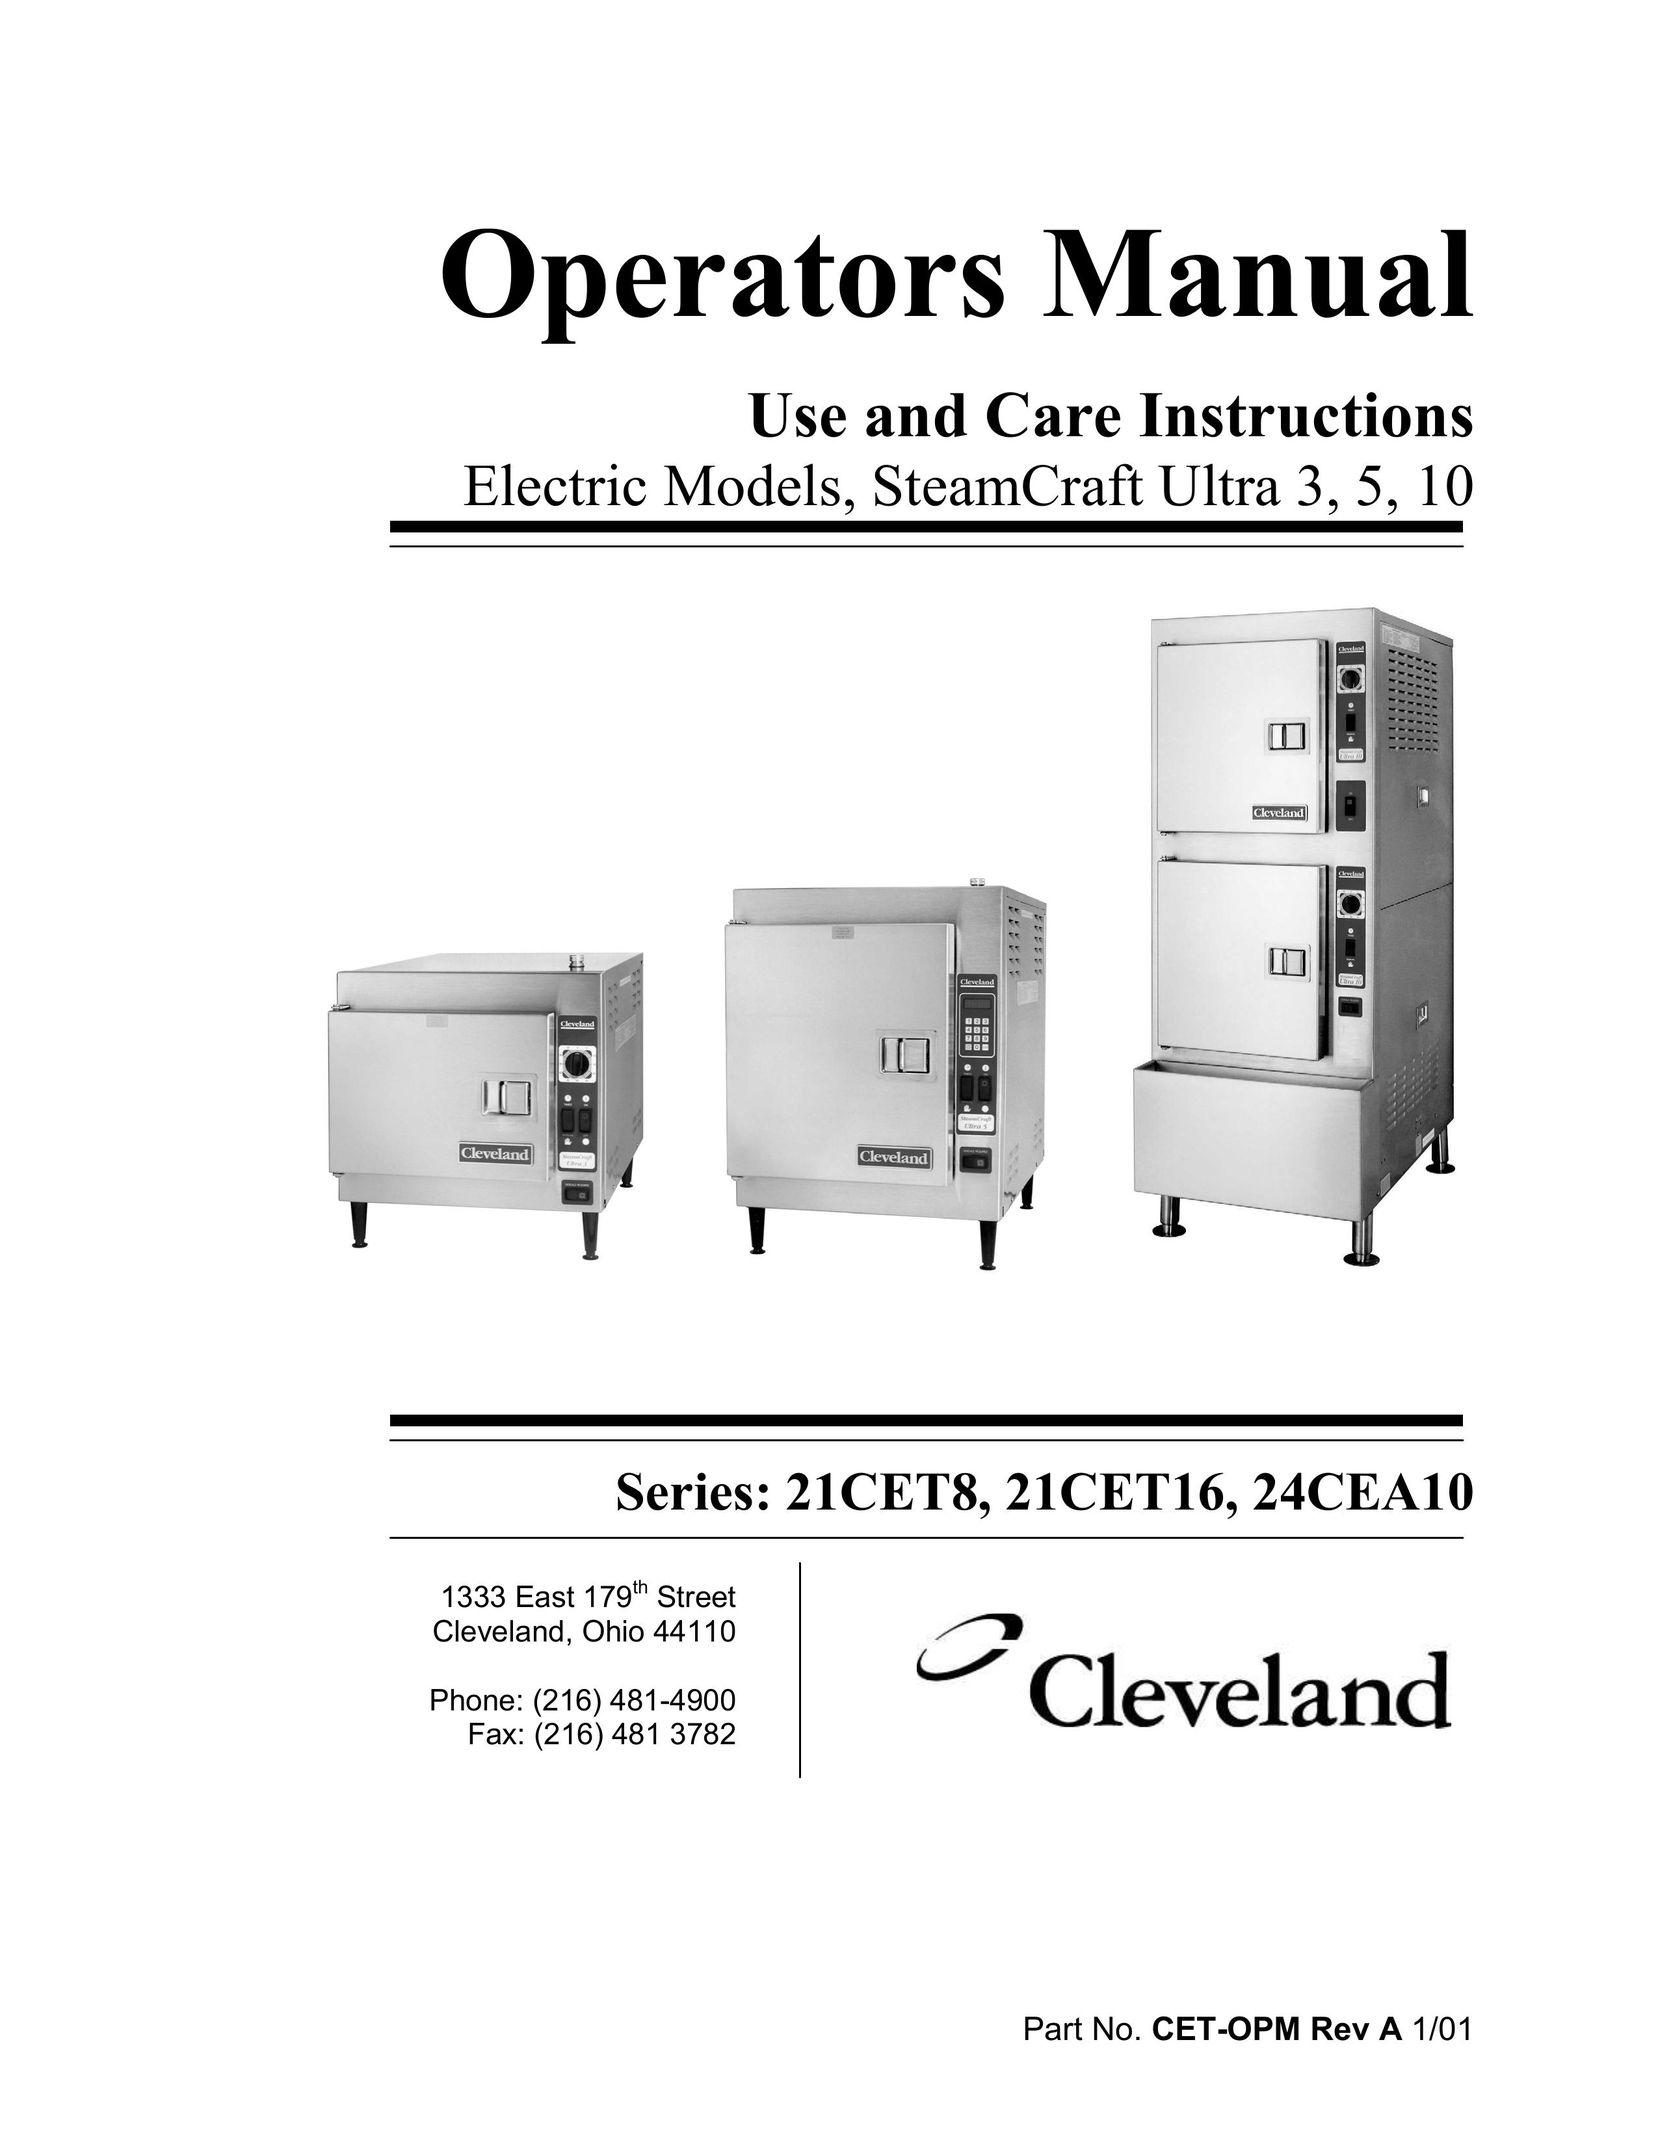 Cleveland Range 24CEA10 Electric Steamer User Manual